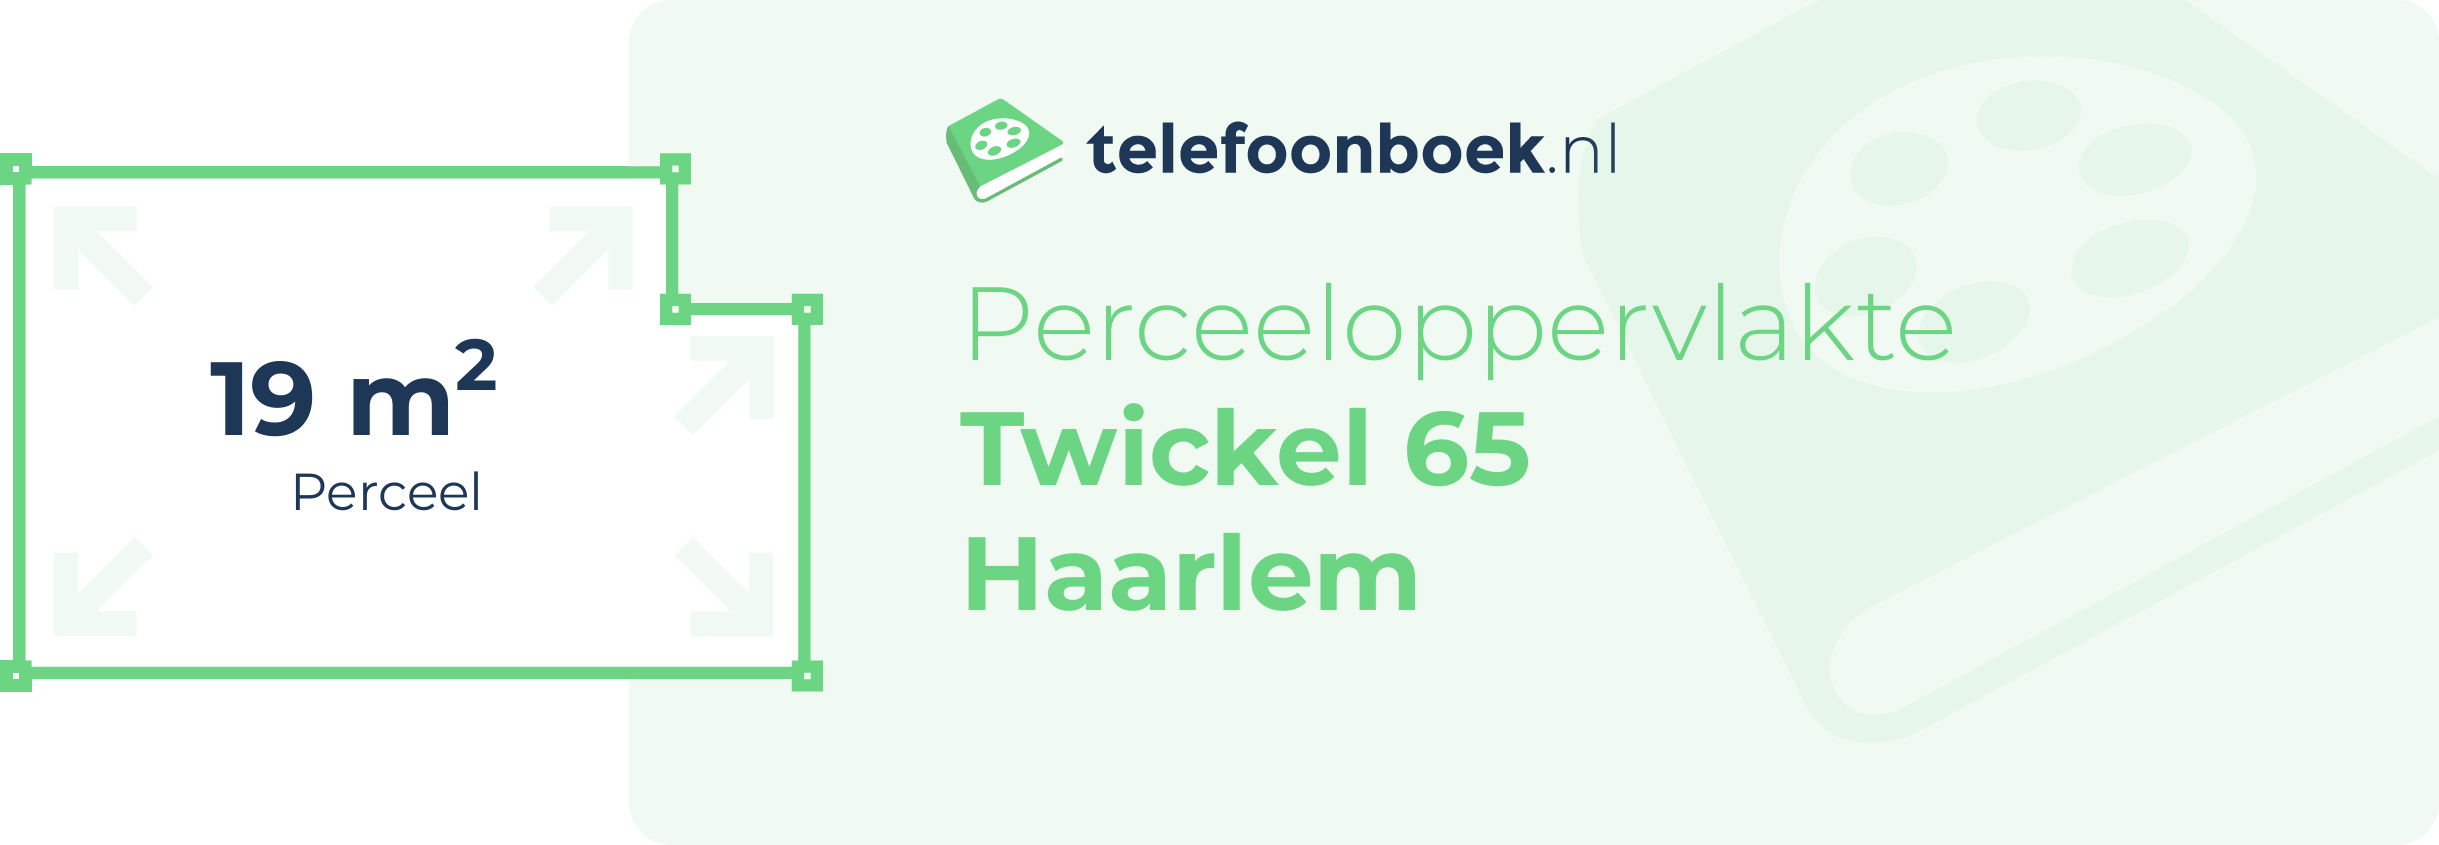 Perceeloppervlakte Twickel 65 Haarlem